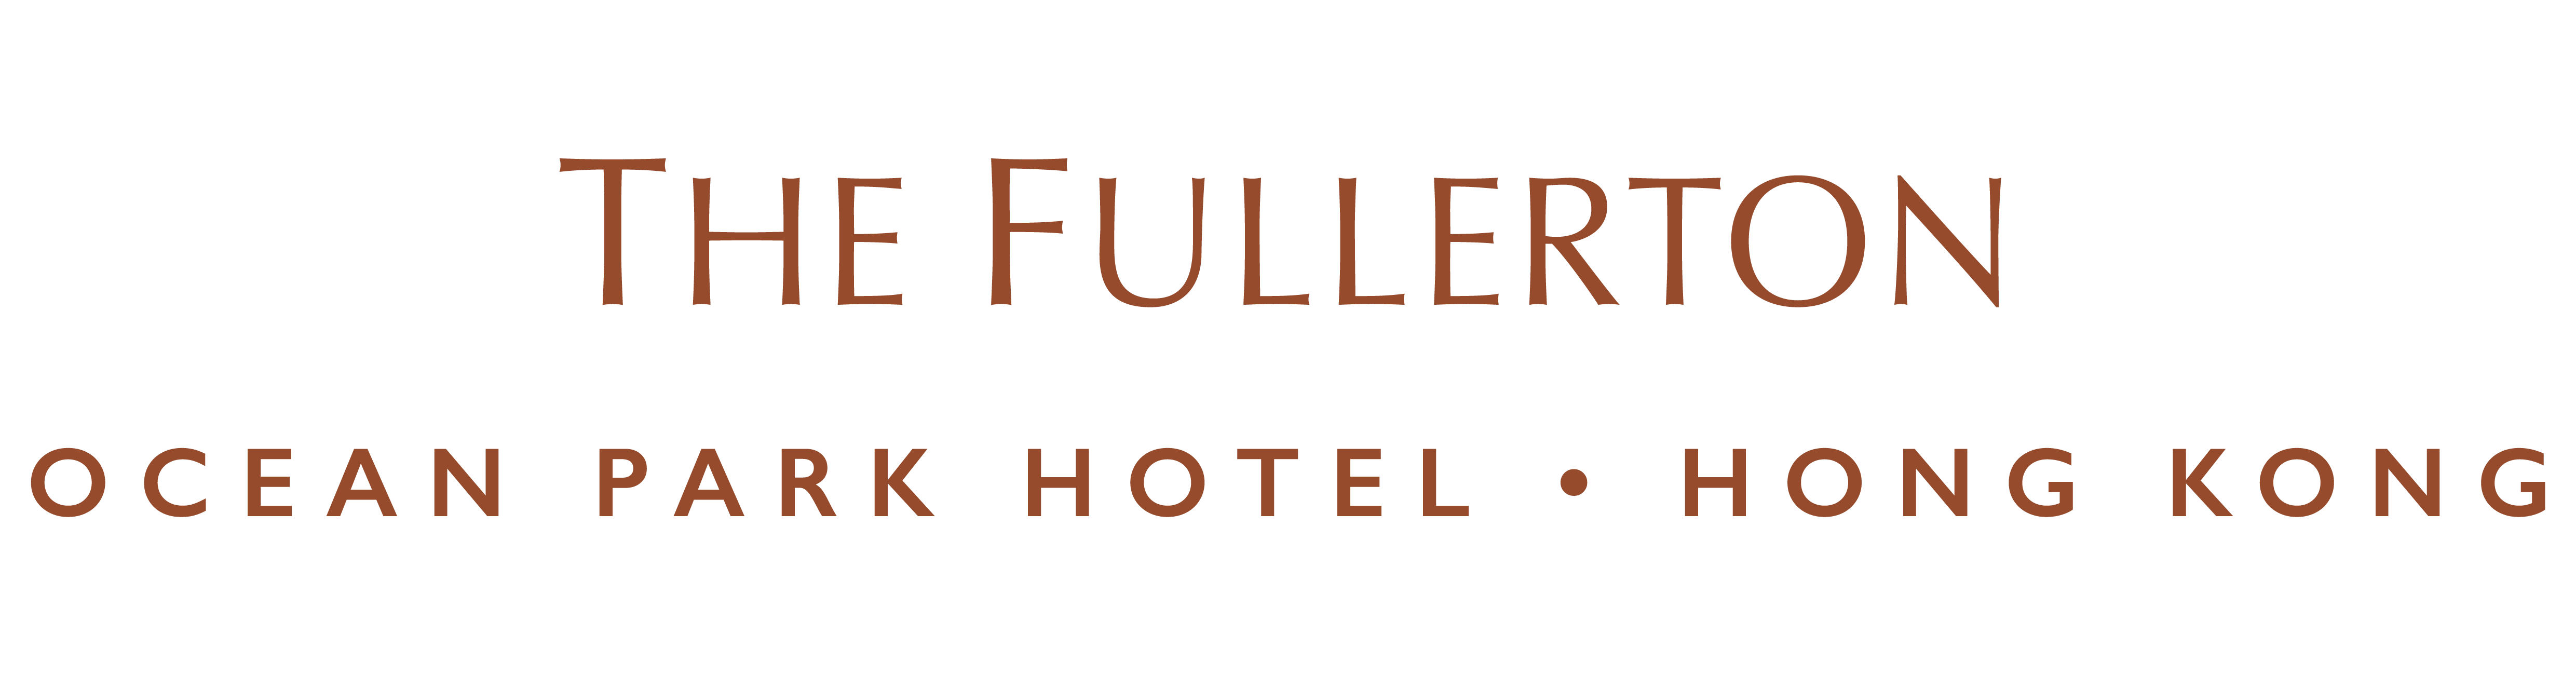 The Fullerton Ocean Park Hotel Hong Kong_Logo